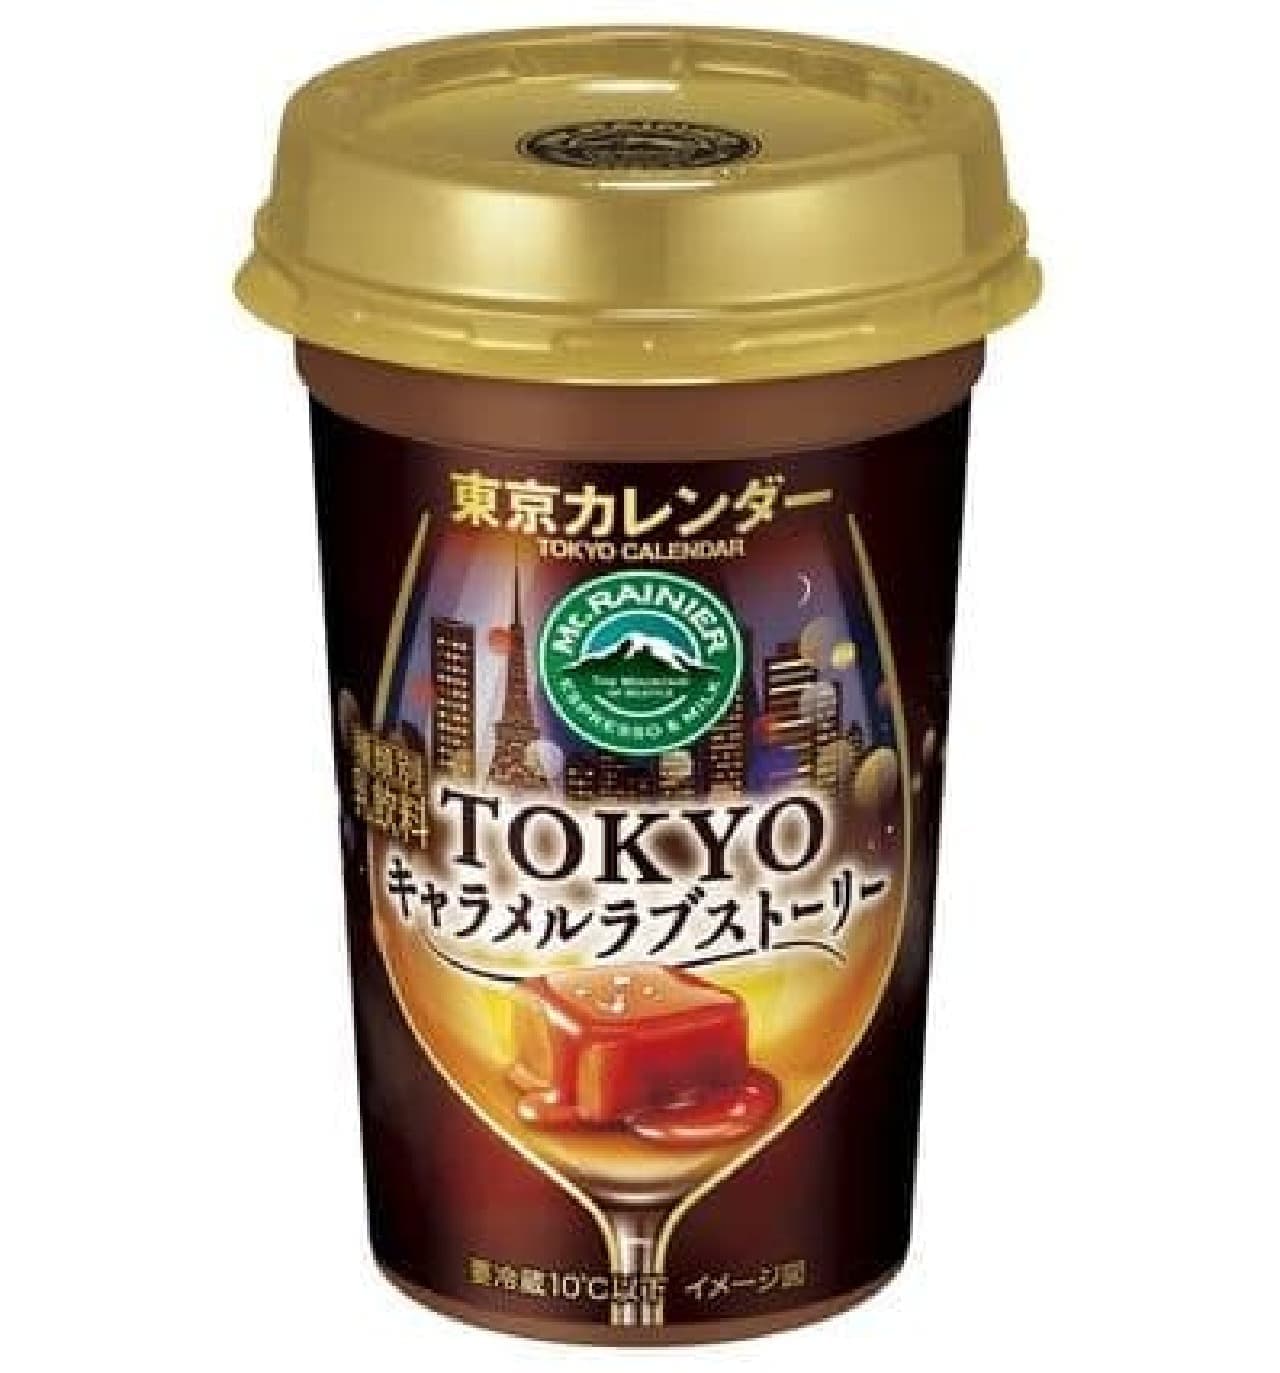 Morinaga Dairy "Mount Rainier TOKYO Caramel Love Story"